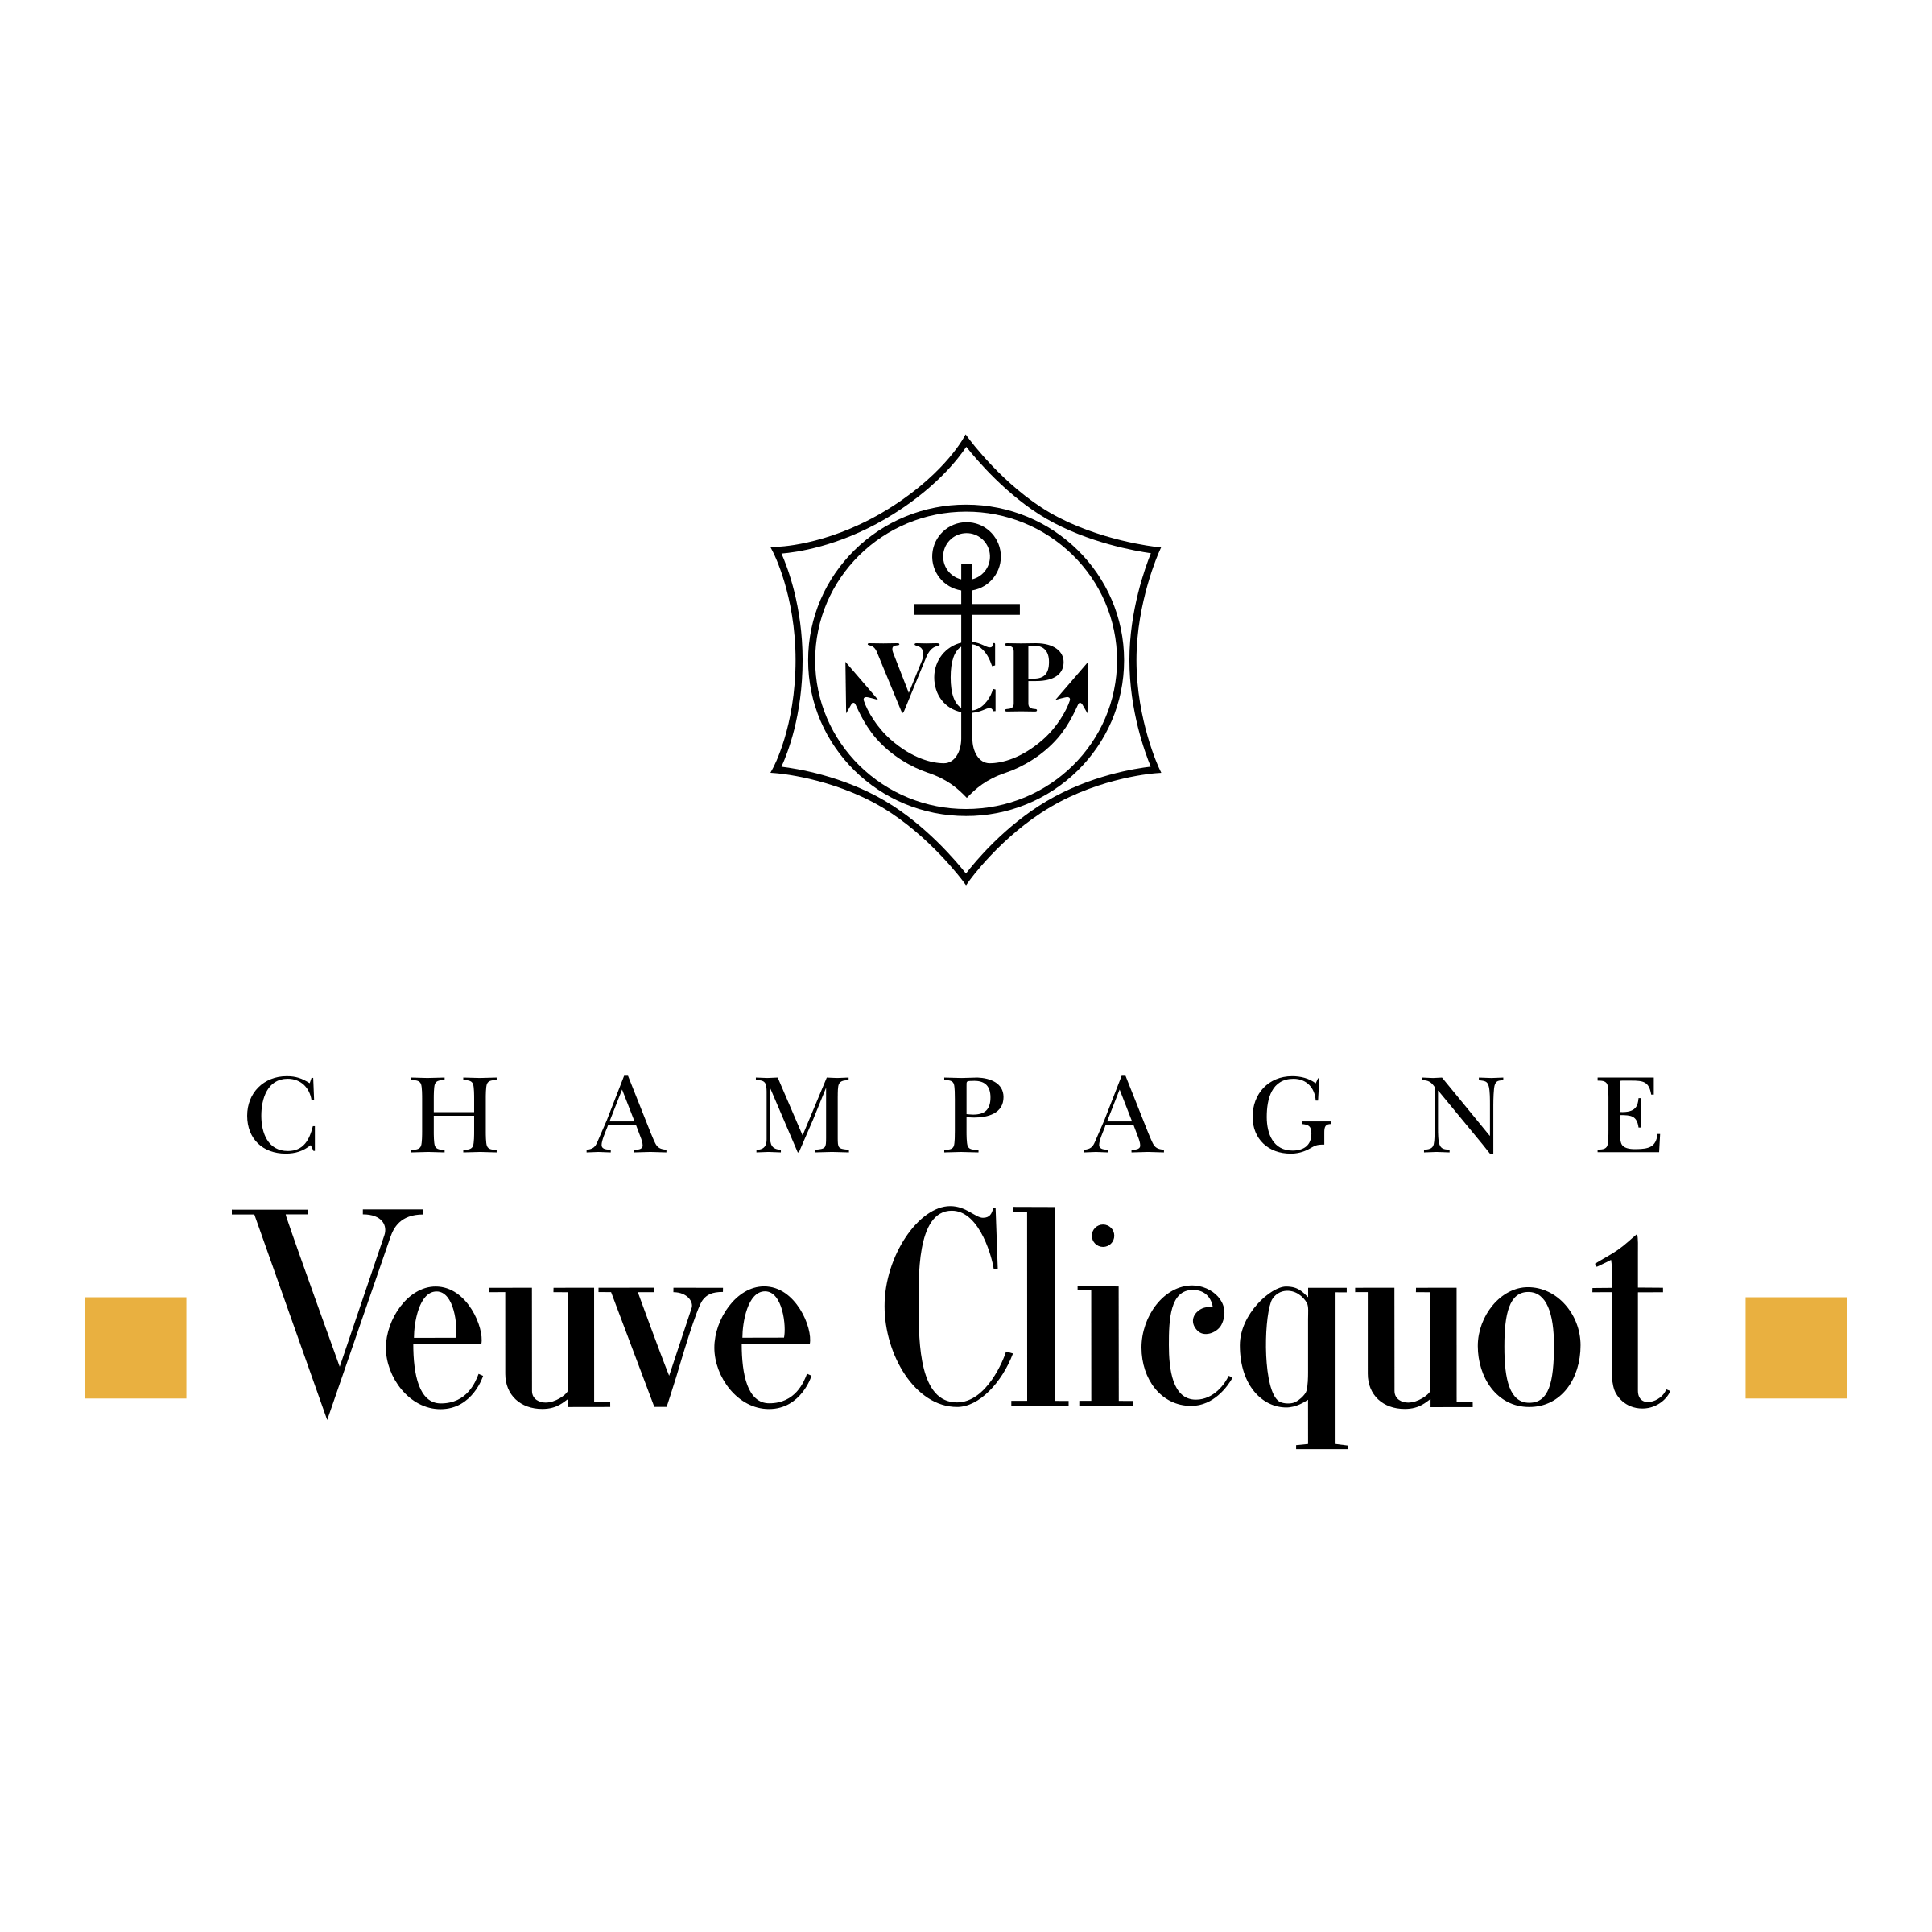 Champagne Logo - Veuve Clicquot Champagne Logo PNG Transparent & SVG Vector - Freebie ...